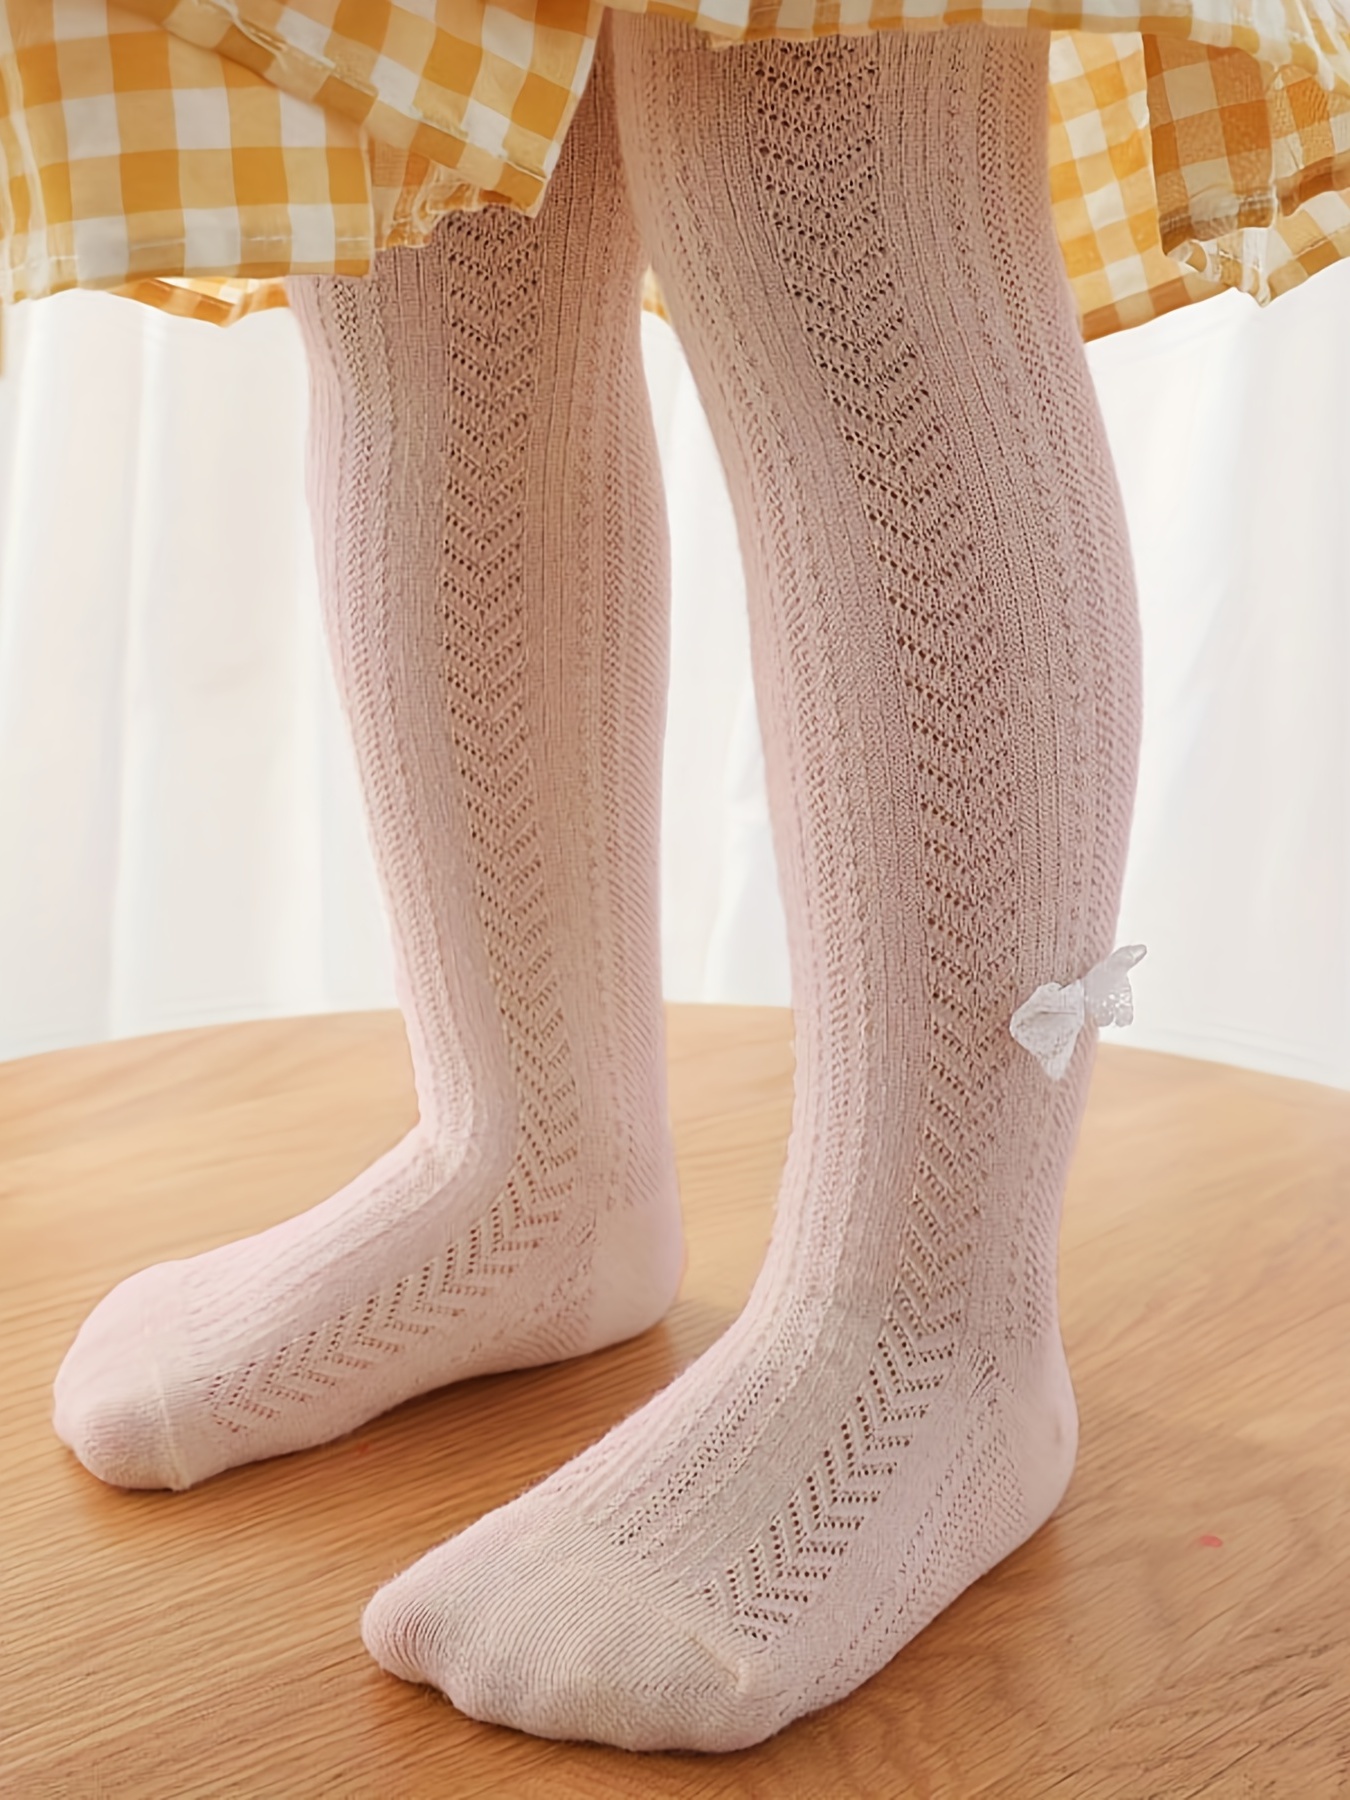 Girls White Tights Pantyhose Princess Stockings Tights Women Socks